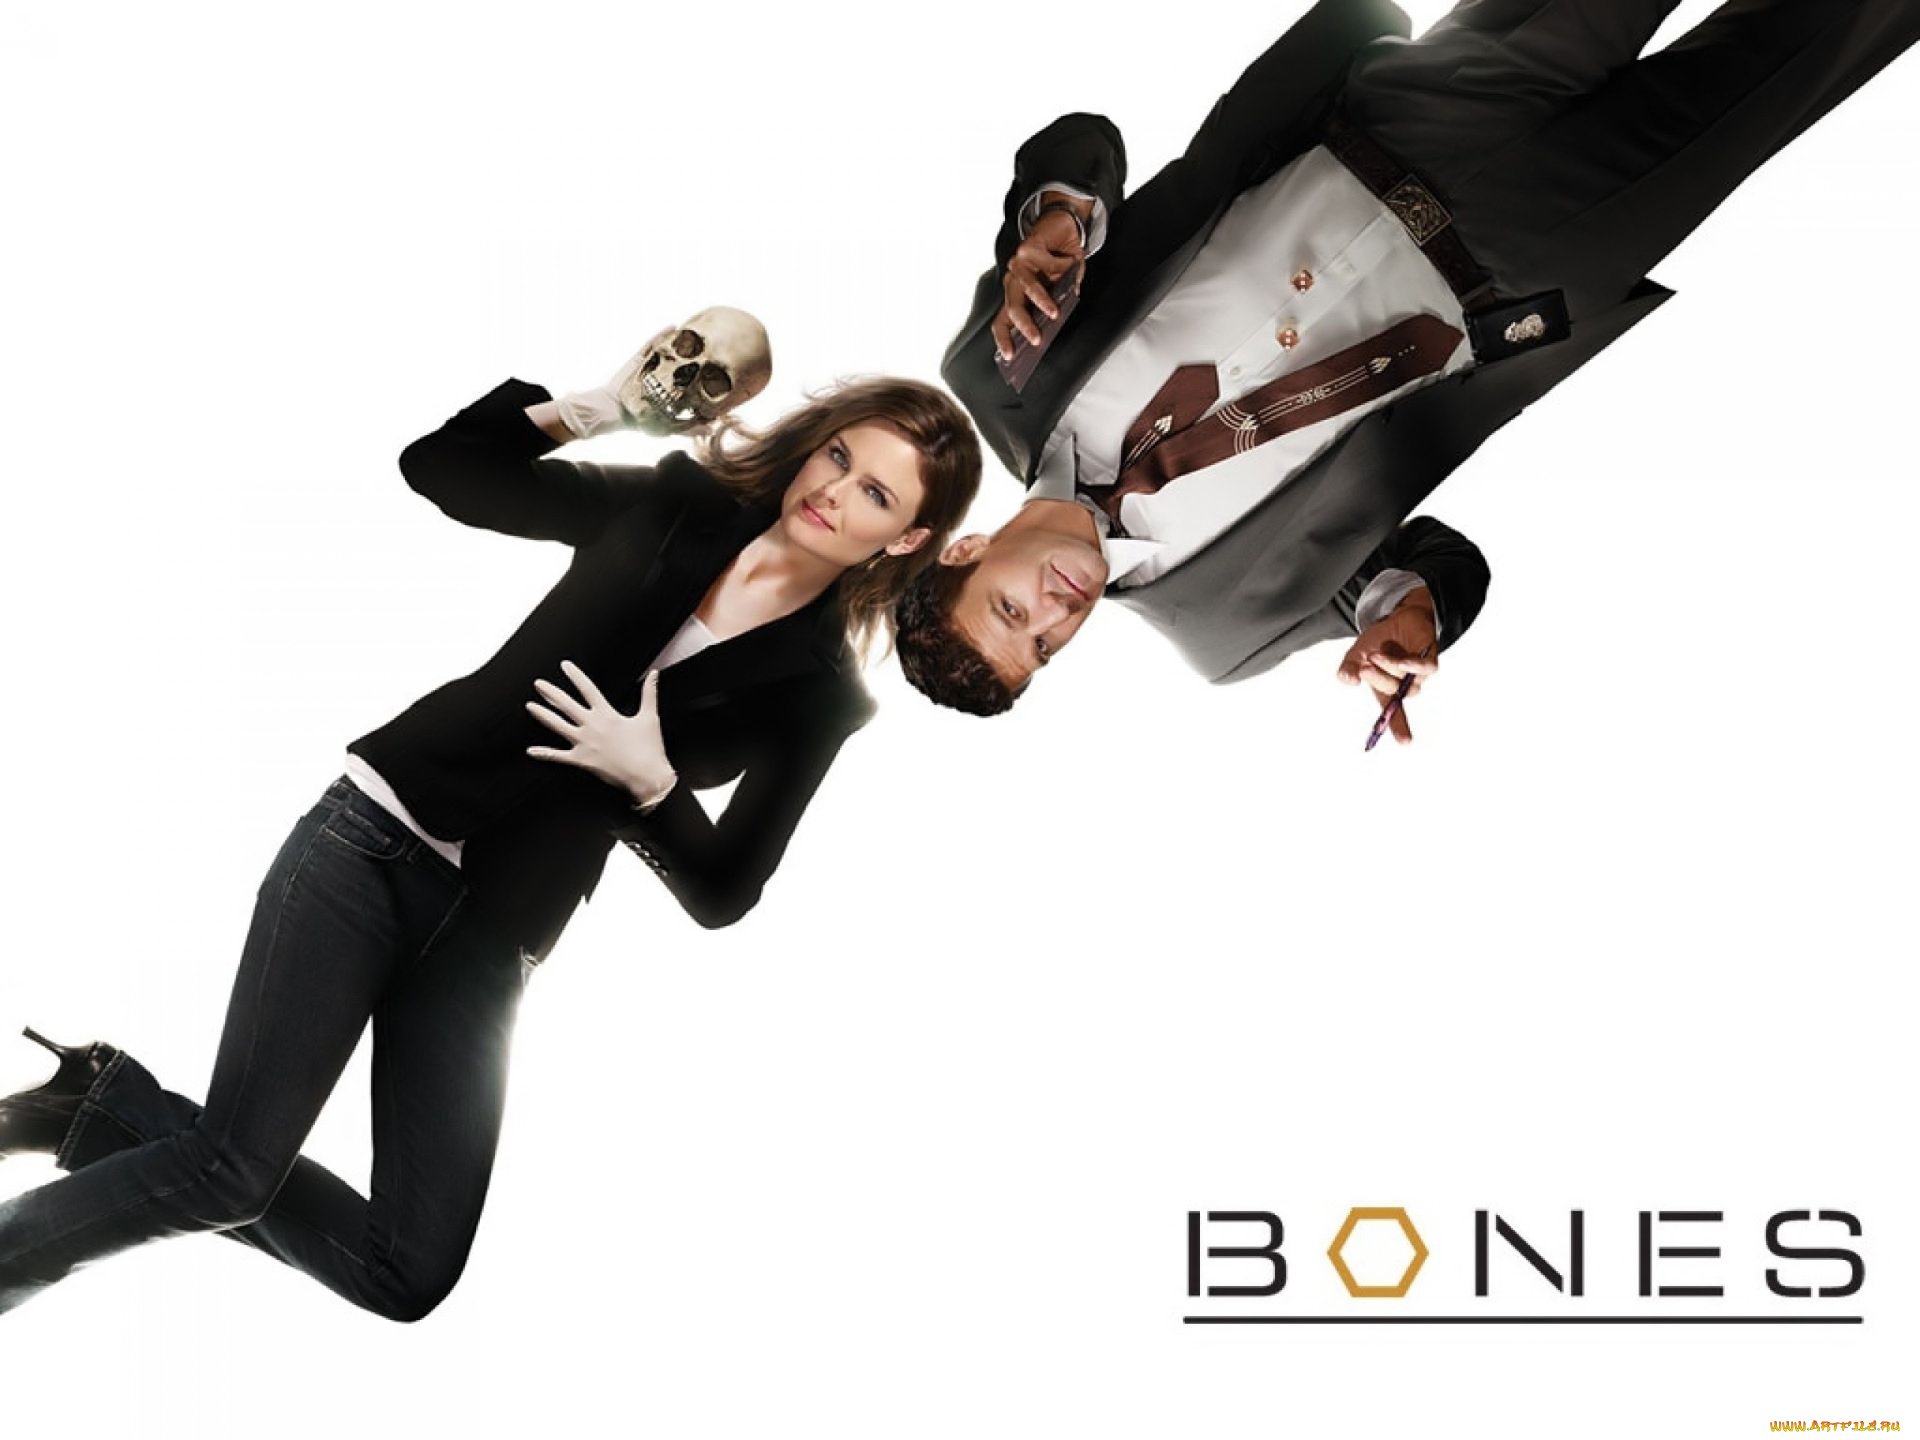 Bones series